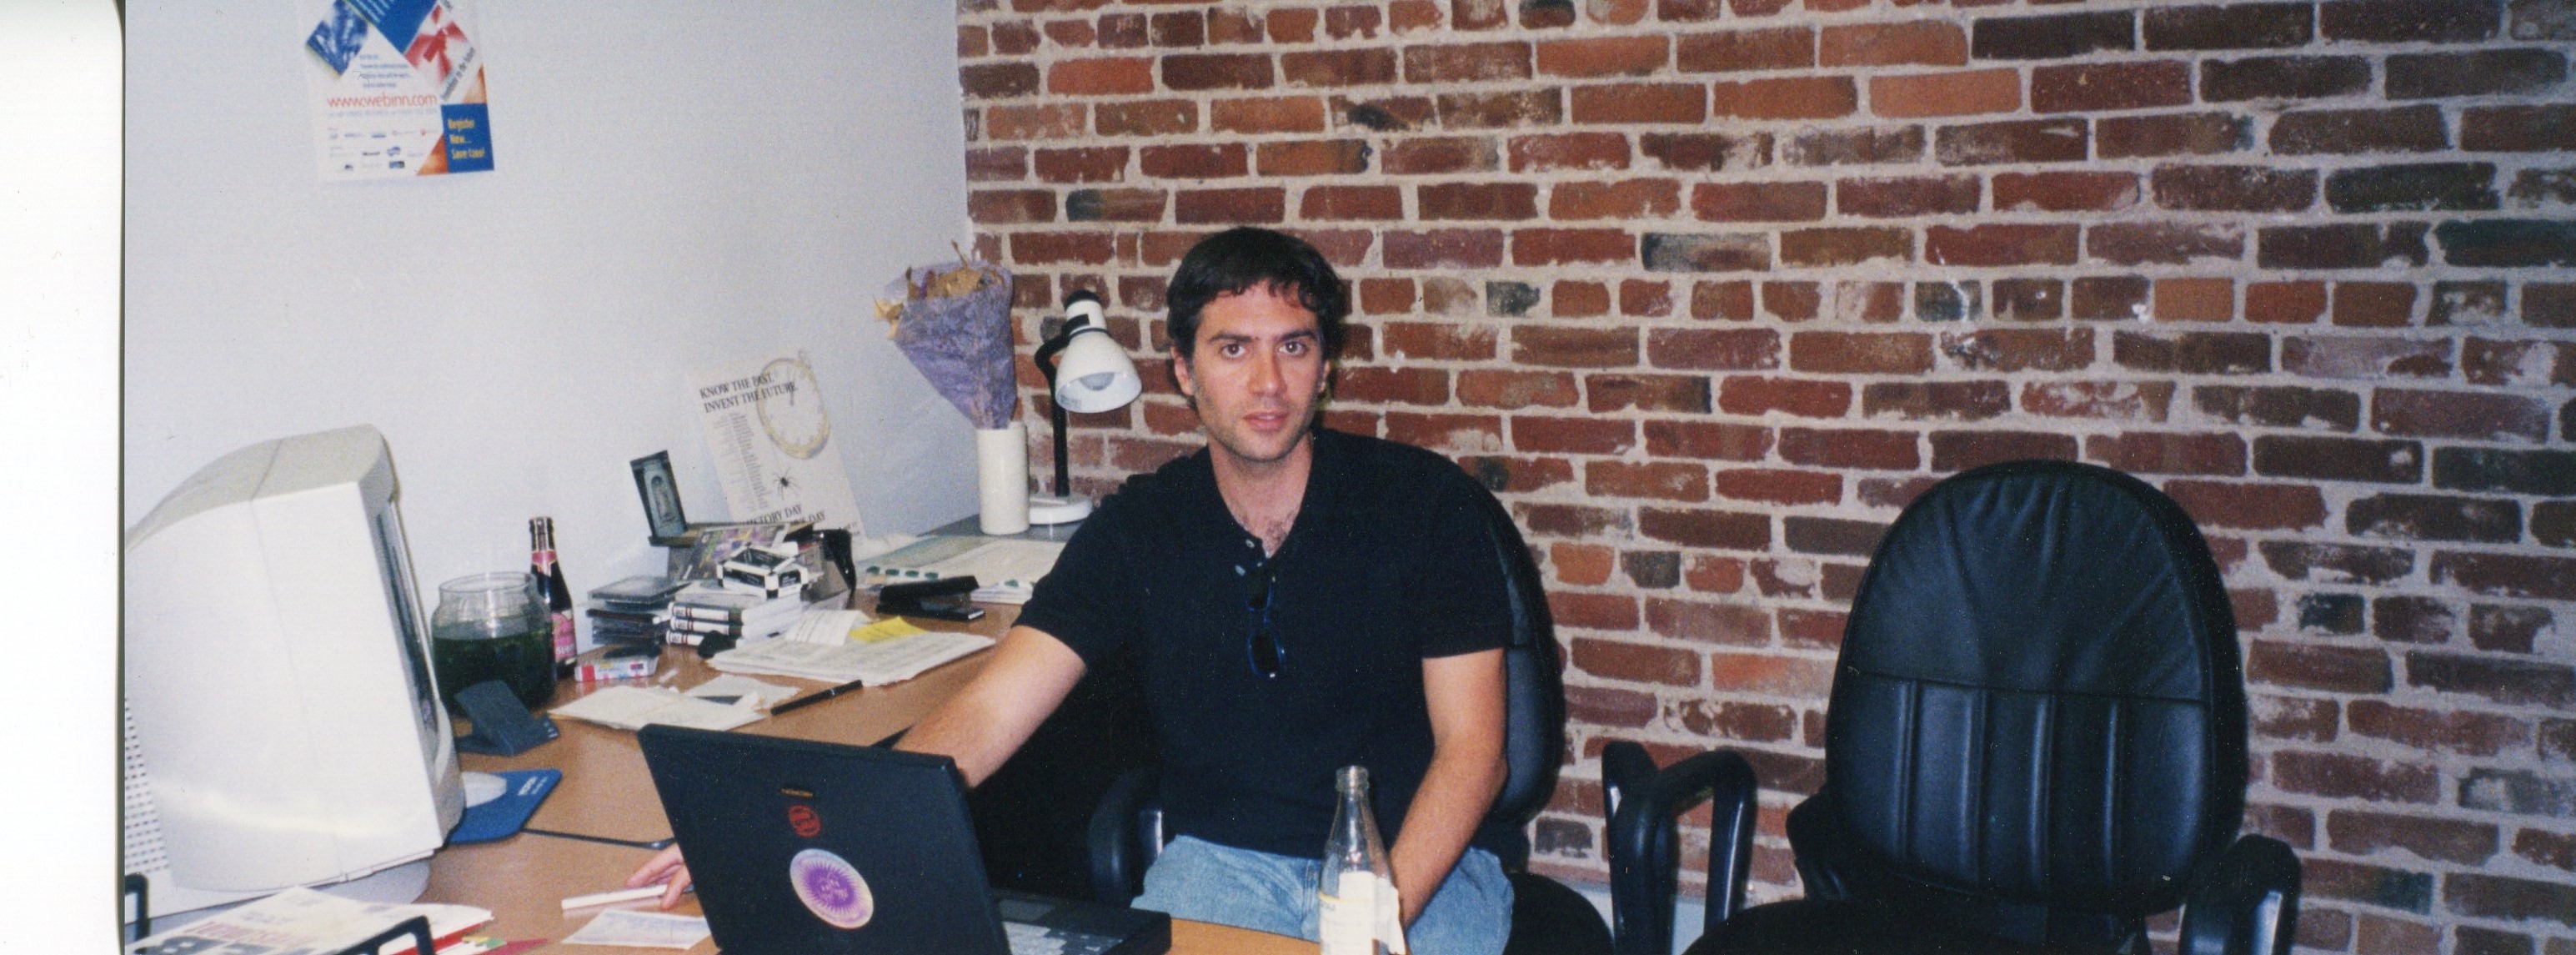 Tony Parisi, co-creator of VRLM [photo courtesy of Mike Roberts]